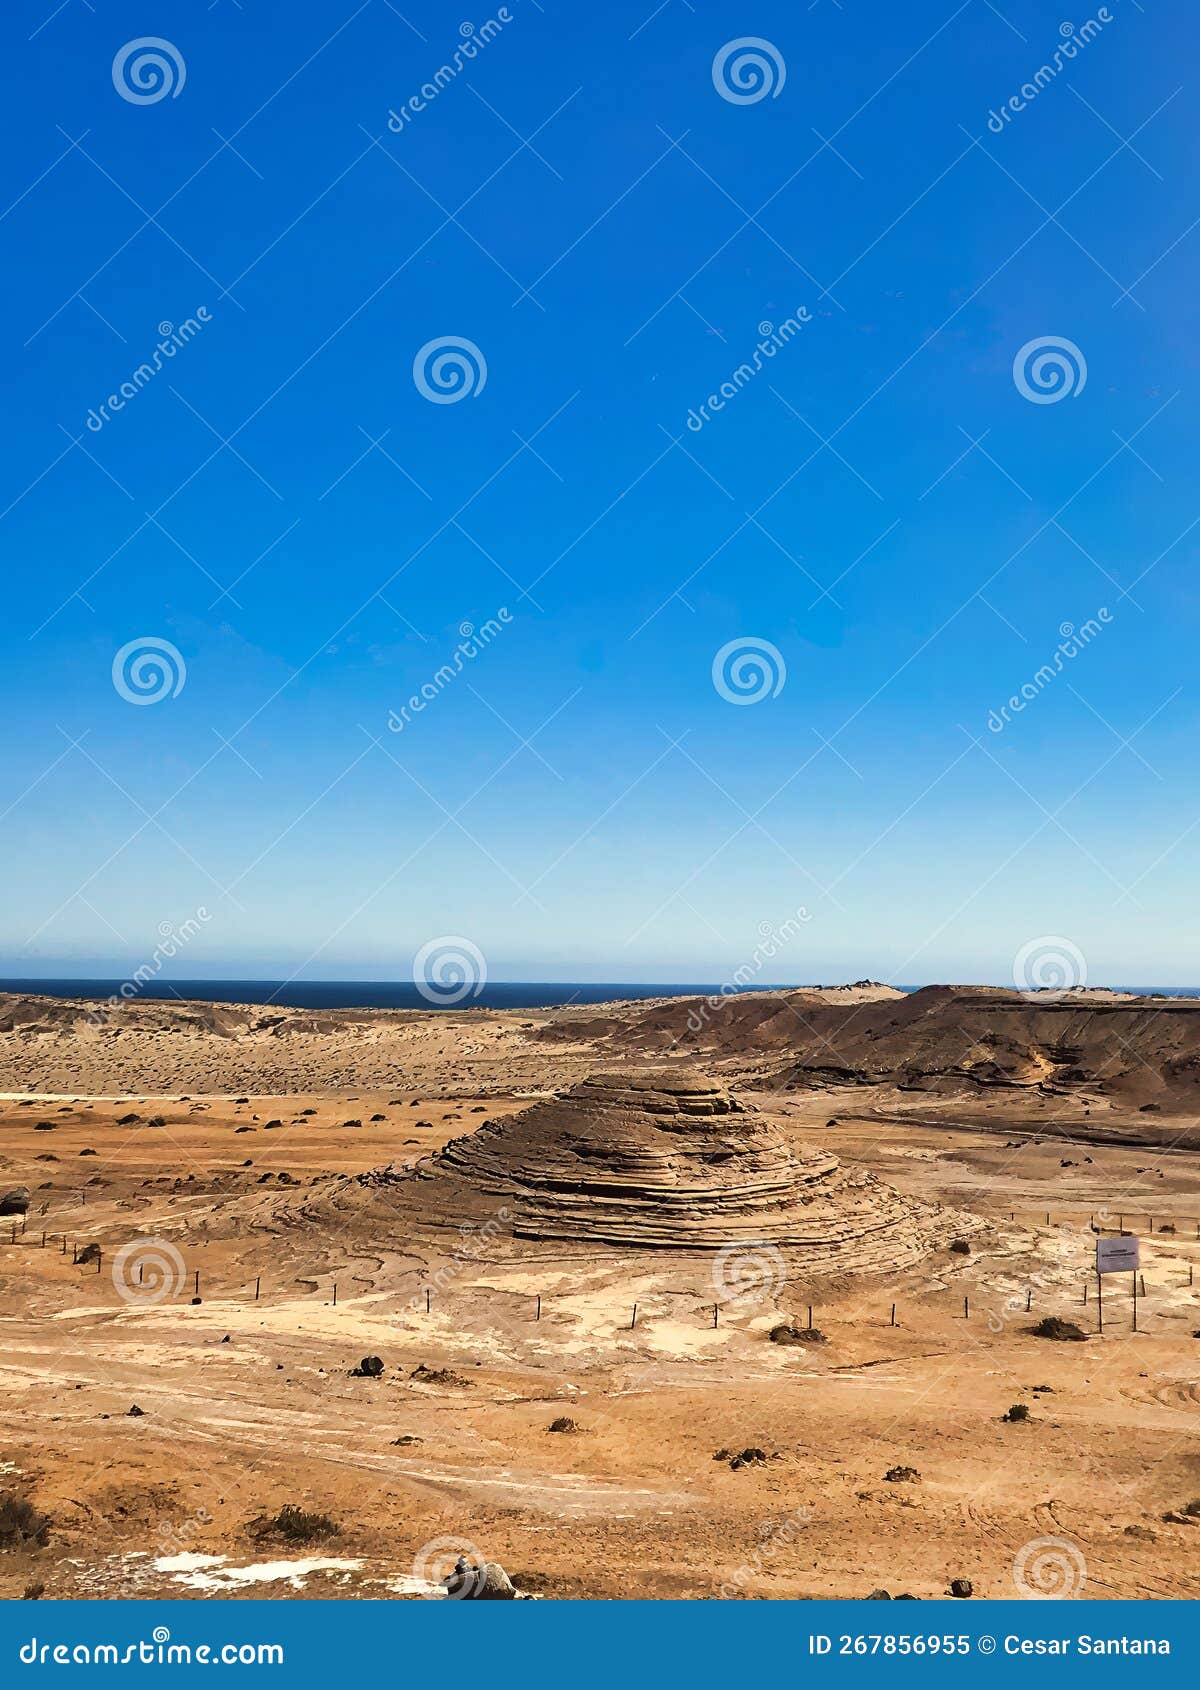 salt pyramids. natural formation of sand and salt located in the quebrada de la higuera